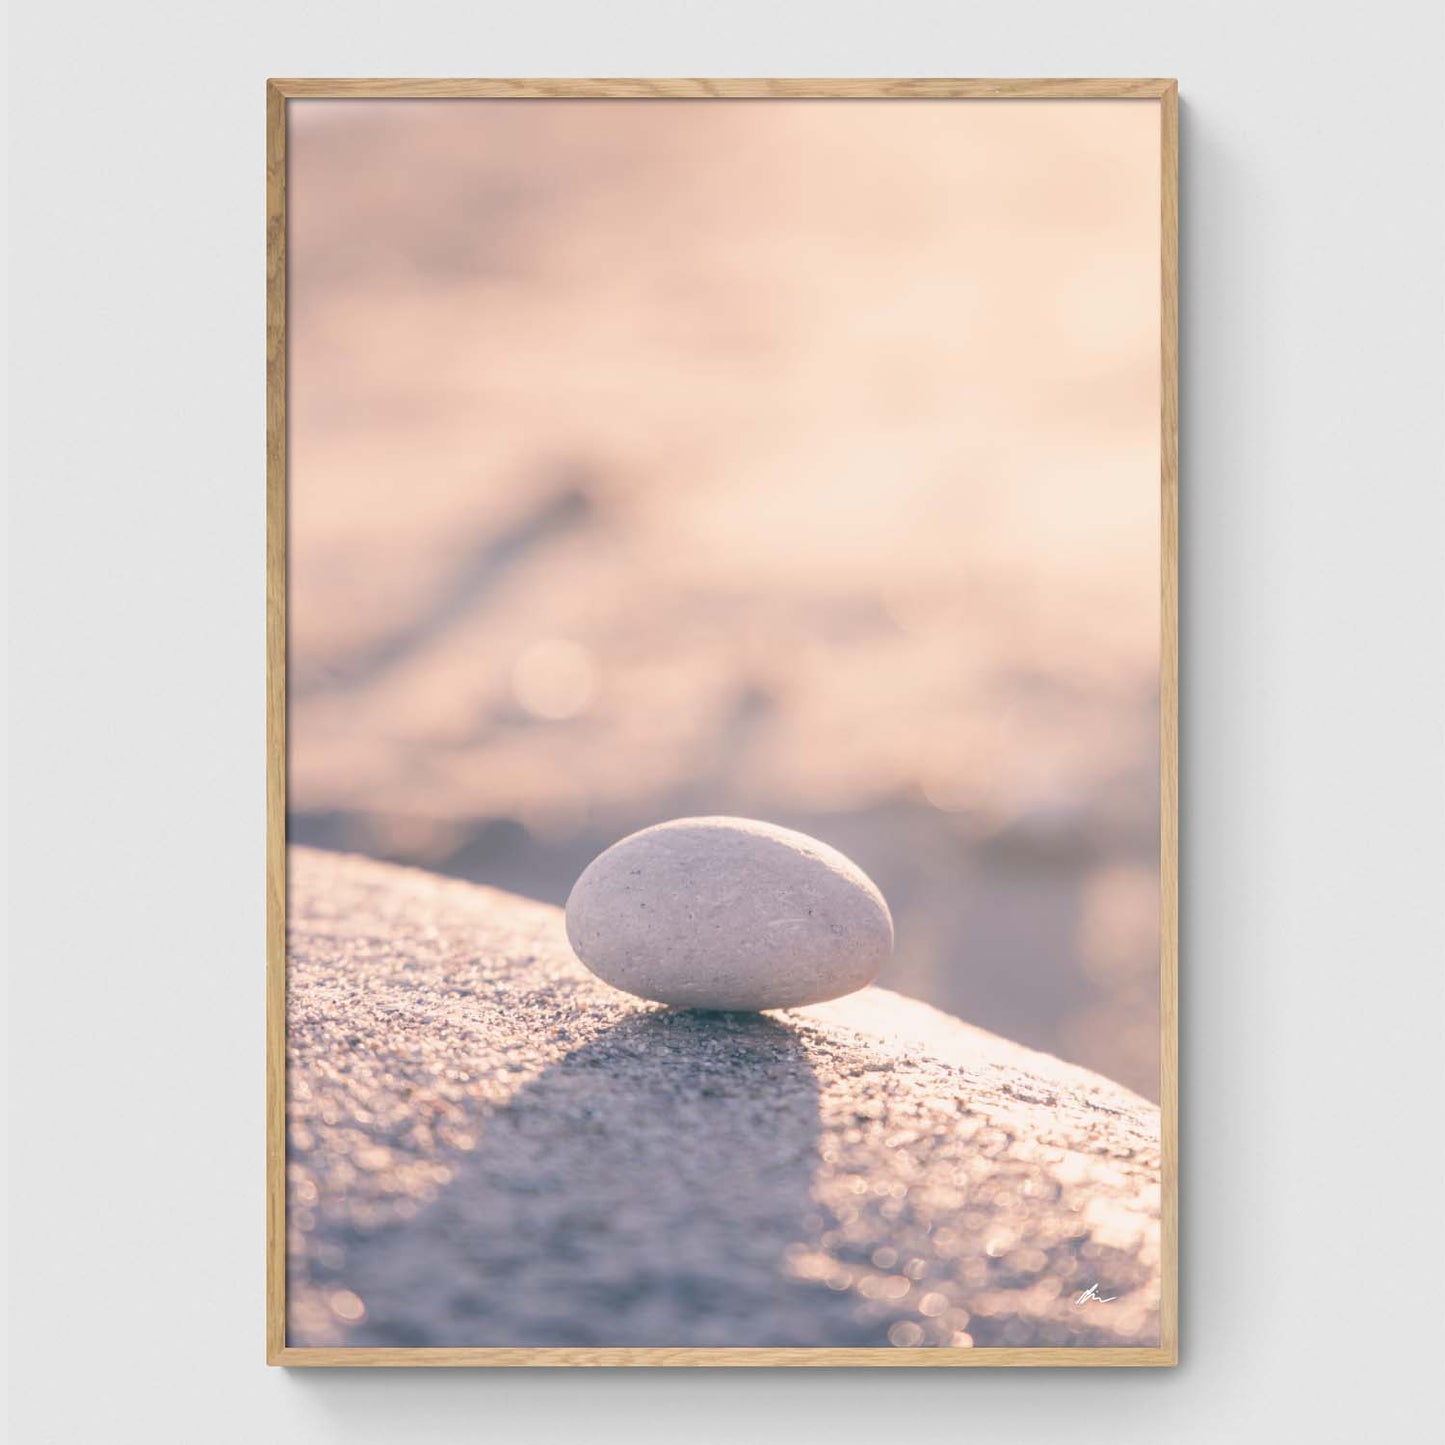 Stone at the beach